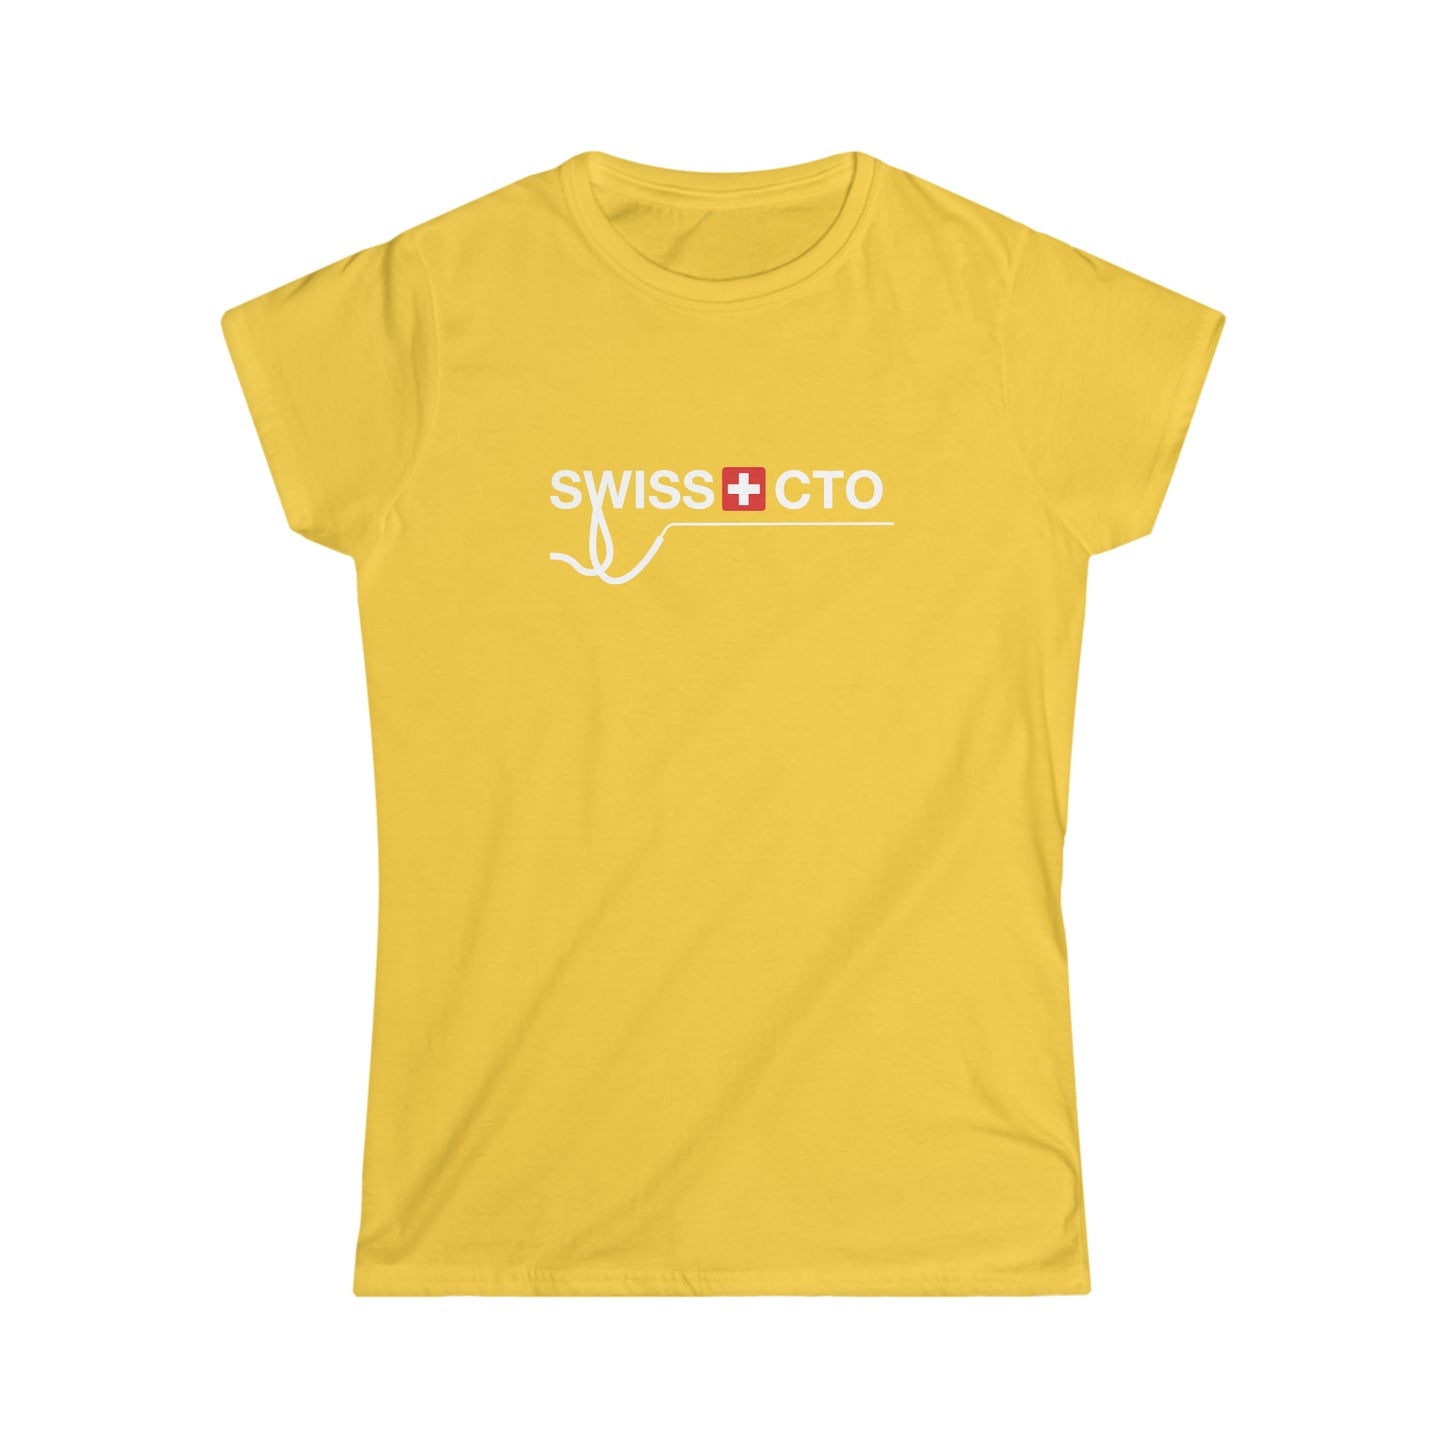 Swiss CTO Logo - female